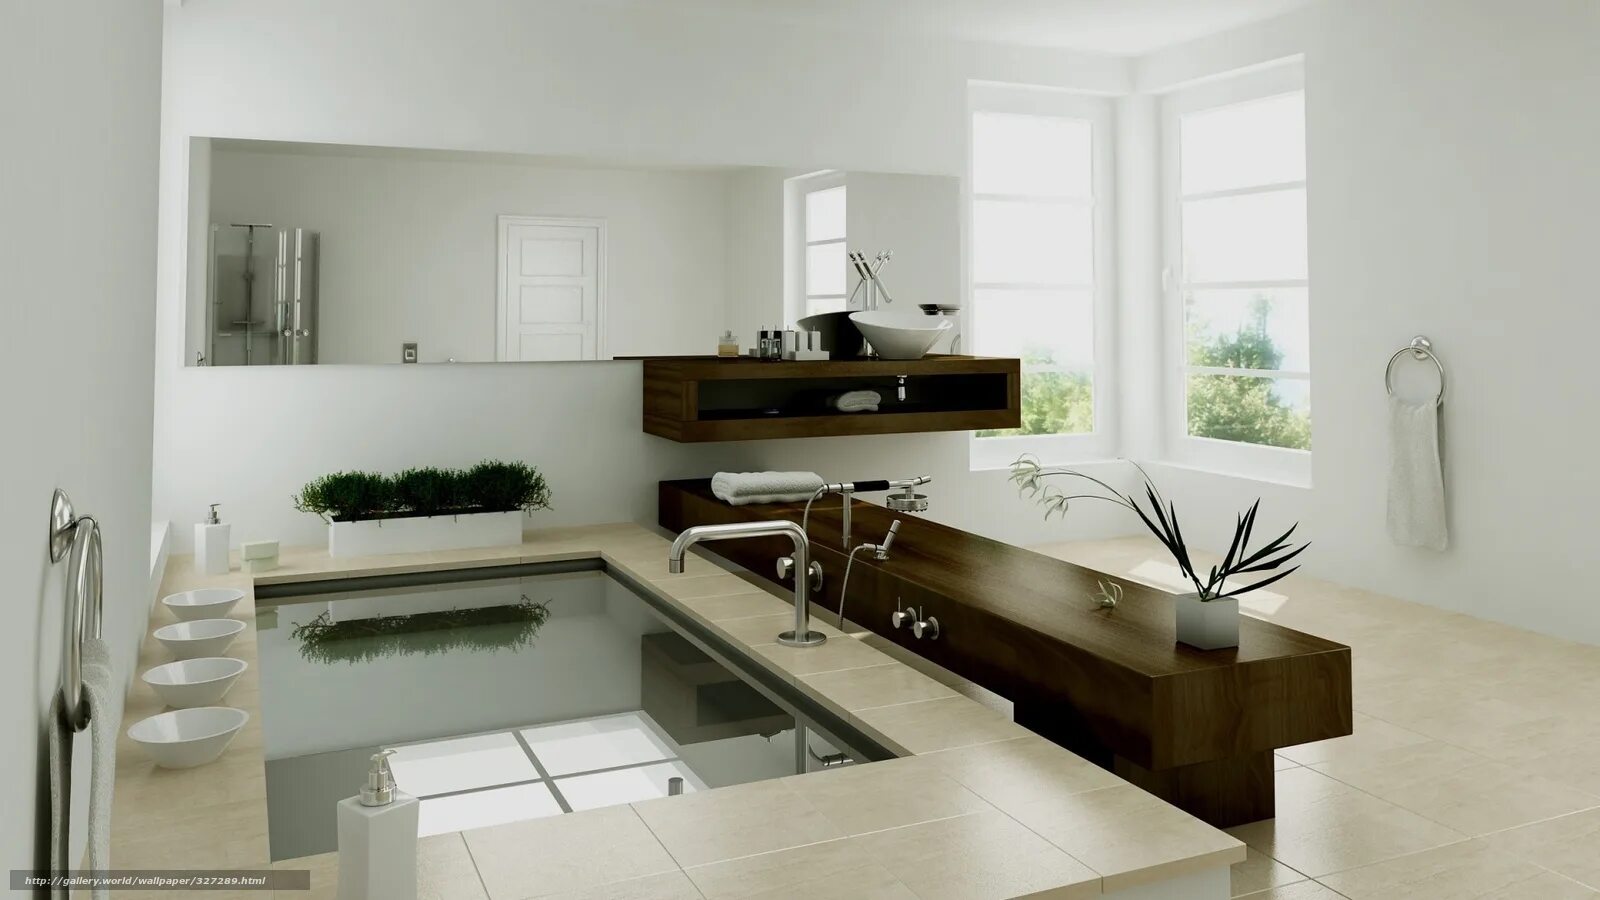 Ванная комната вода. Интерьер ванной комнаты. Современные Ванные комнаты. Современный дизайн ванной. Интерьер ванной комнаты и кухни.